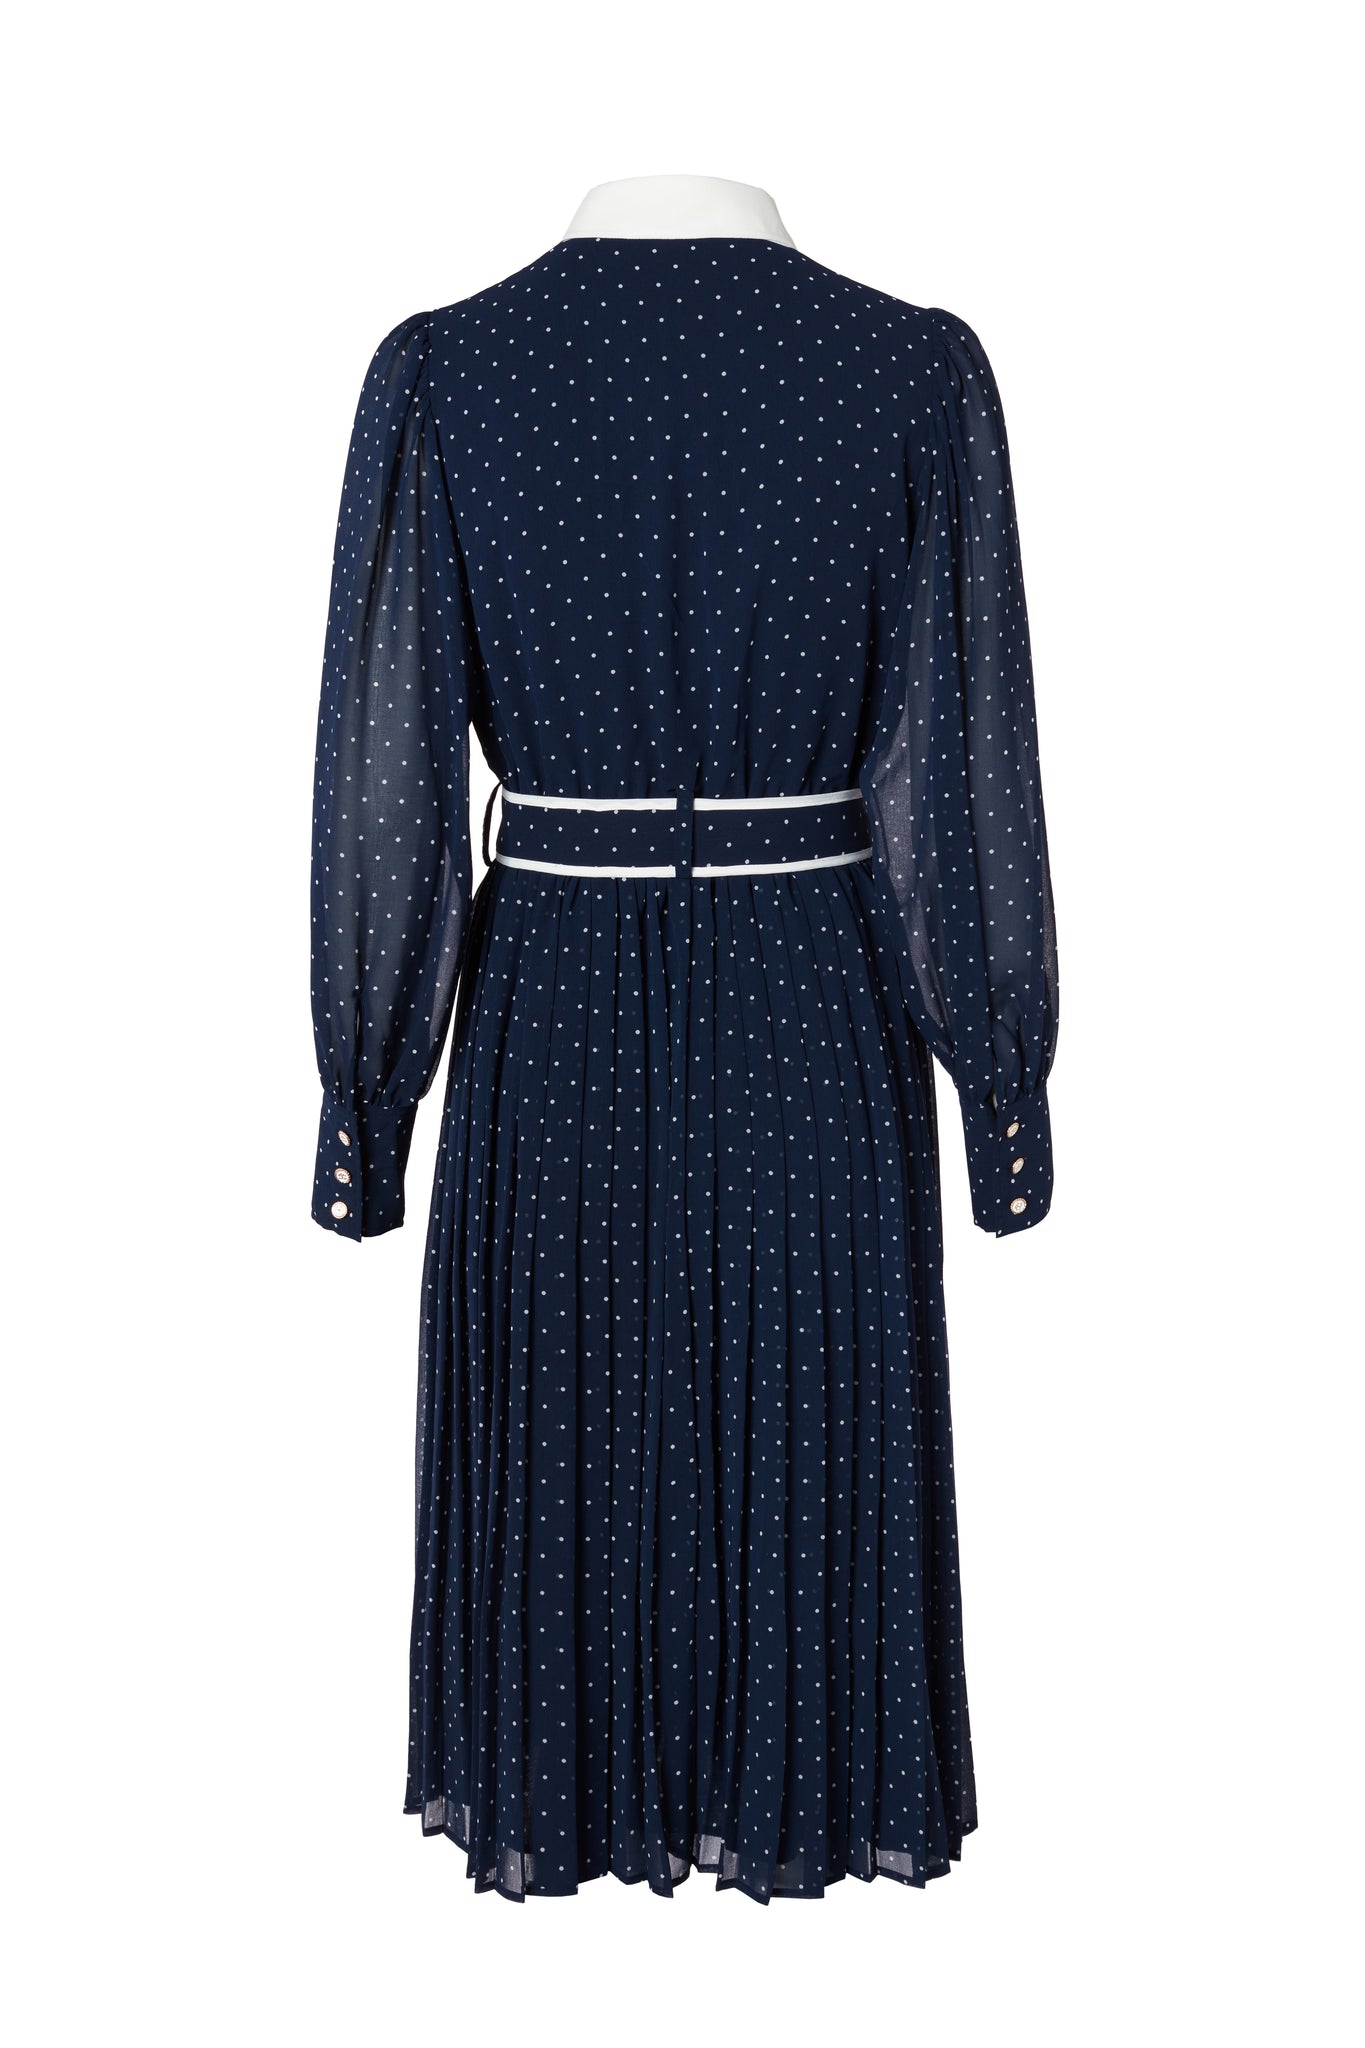 Annabel Pleated Midi Dress (Ink Navy Polka Dot)